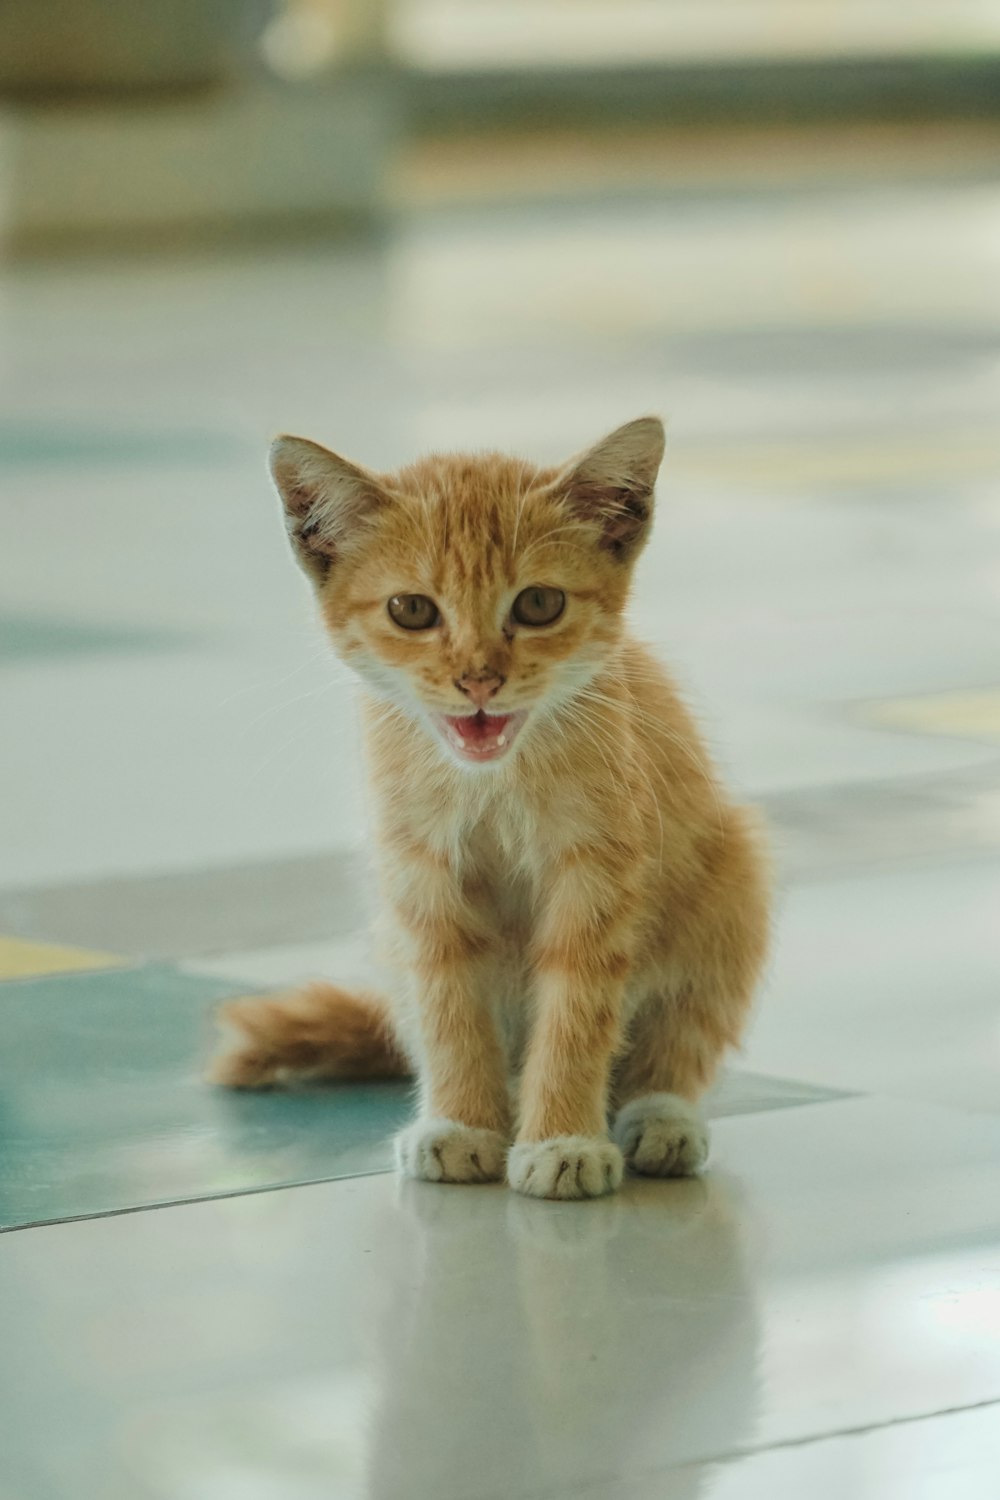 a small orange kitten sitting on top of a tiled floor